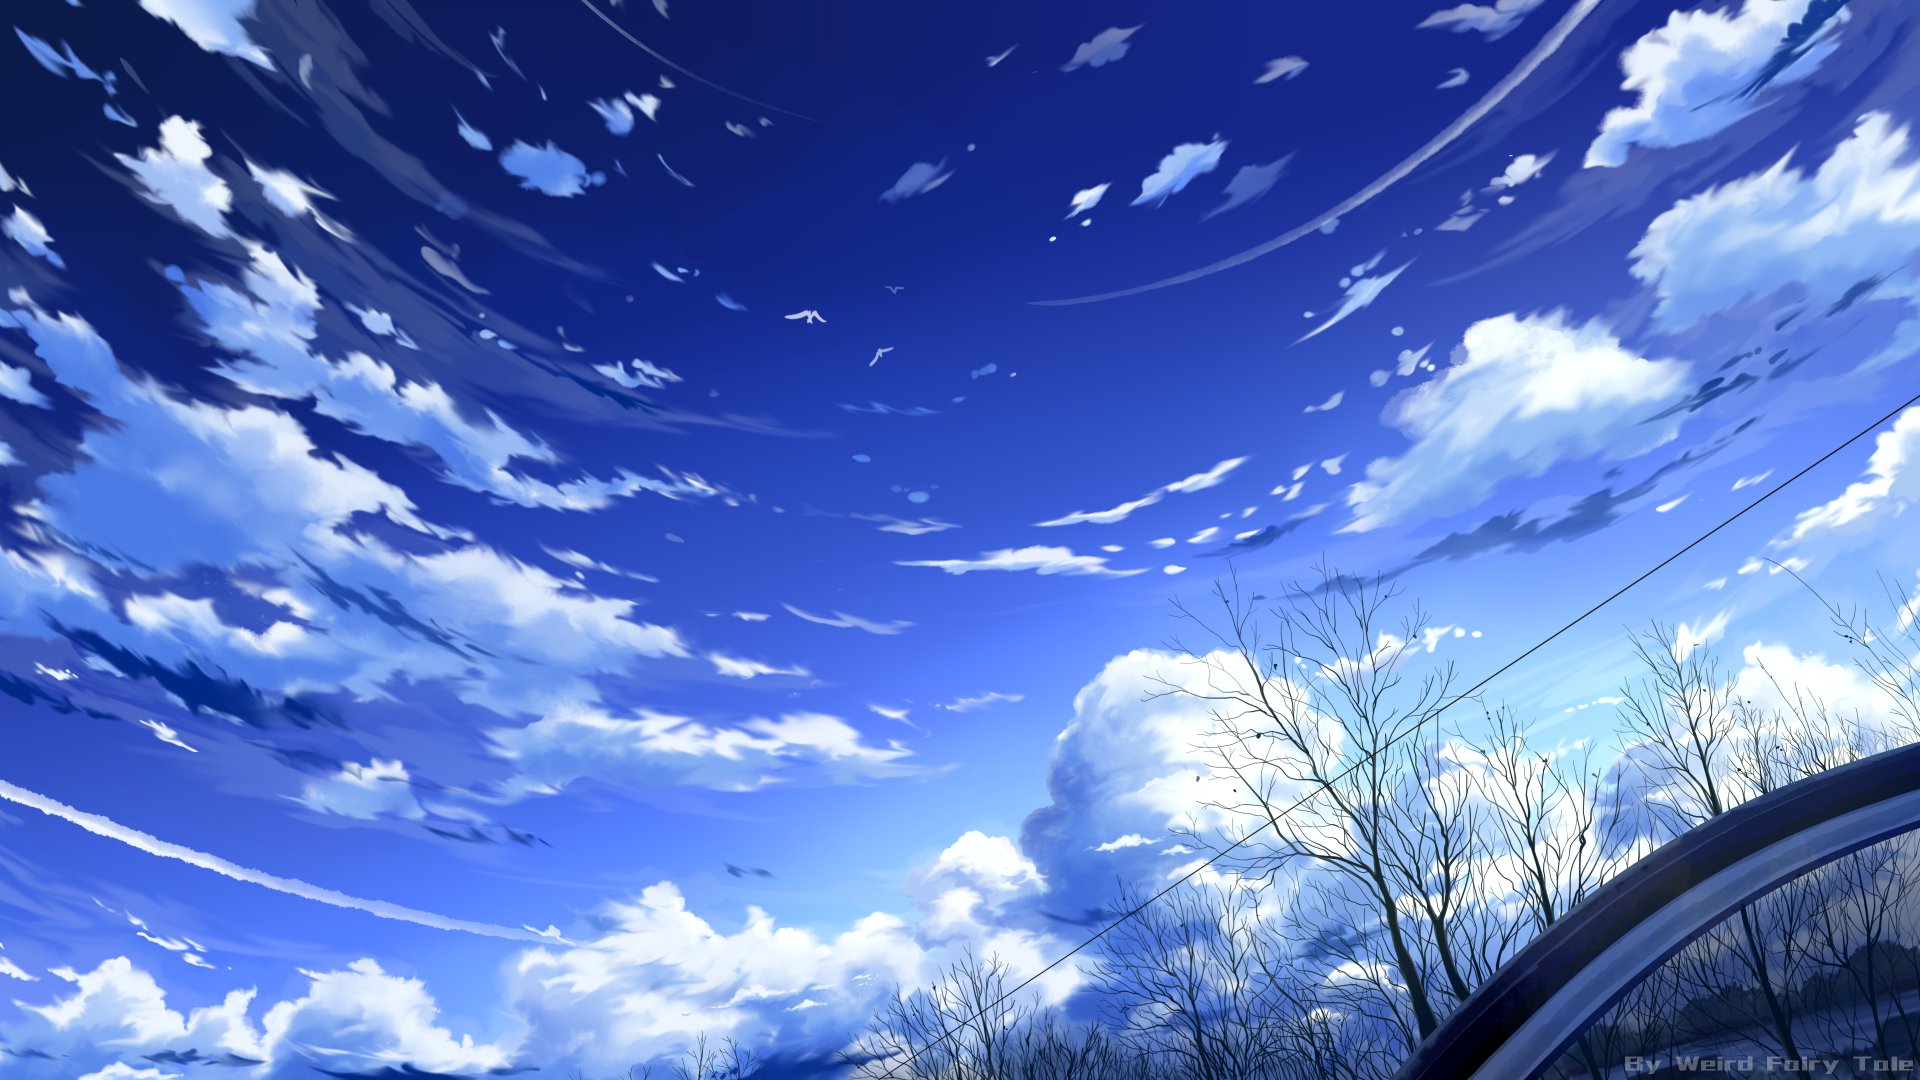 100+] Anime Night Sky Wallpapers | Wallpapers.com